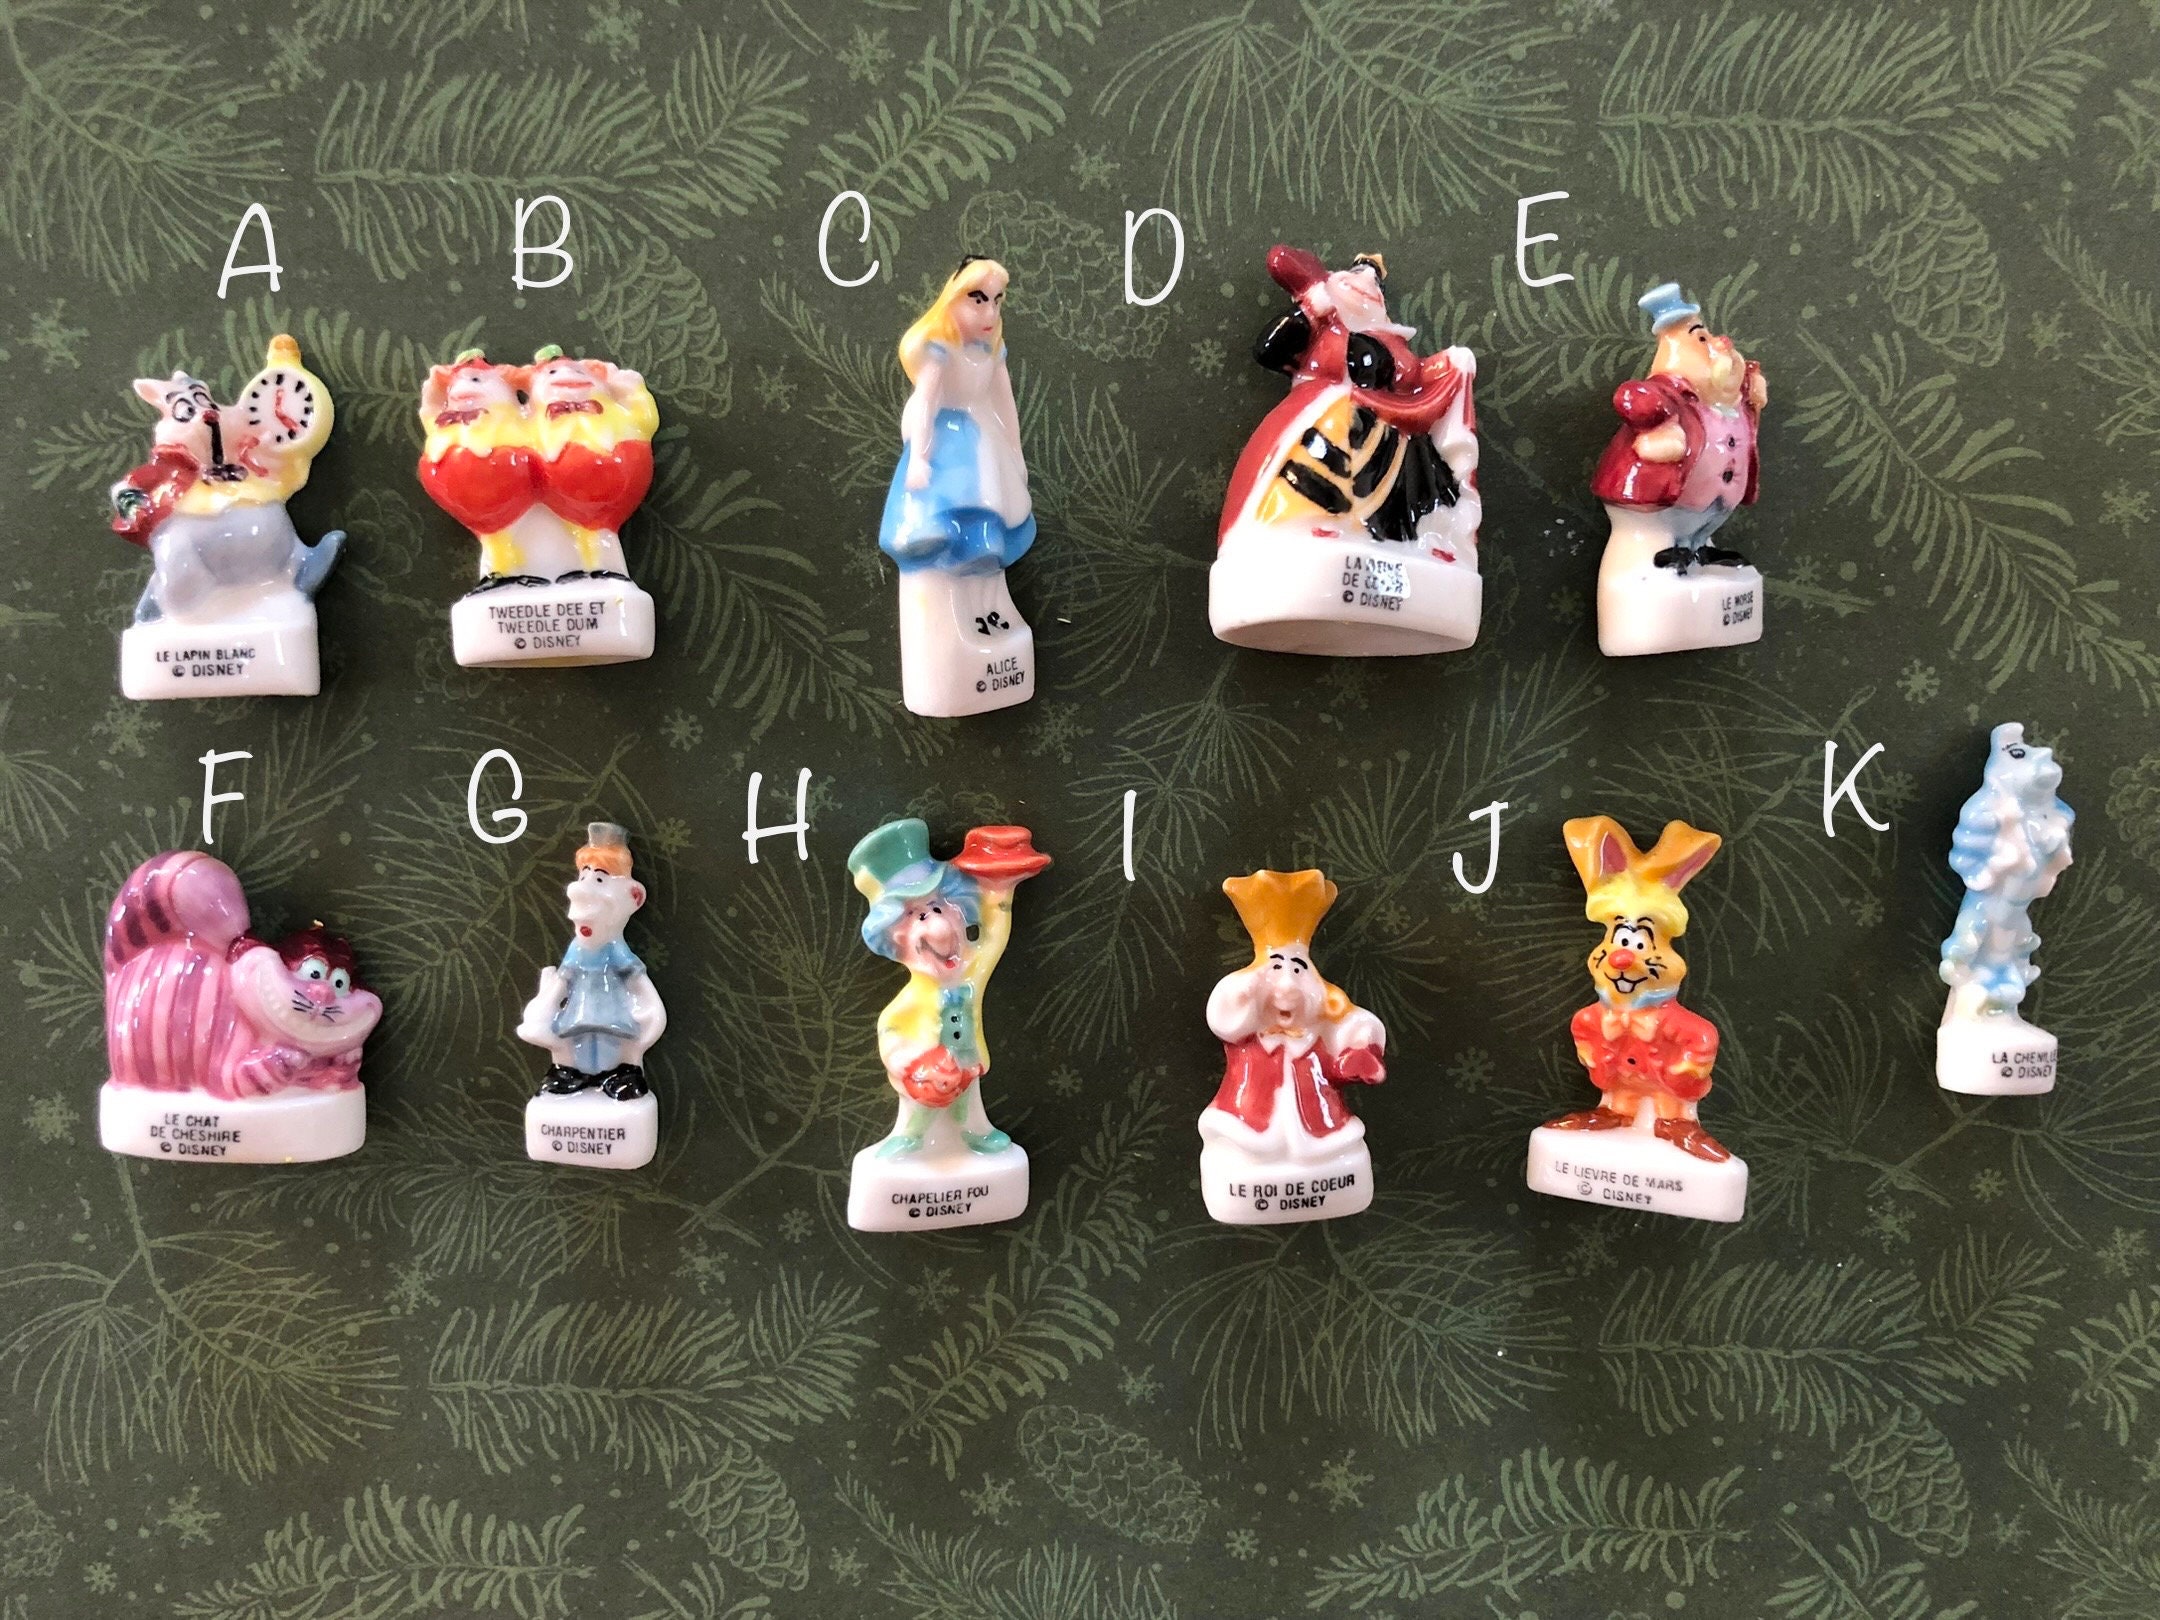 Alice In Wonderland Complete set of Gort figurines very nice no damage